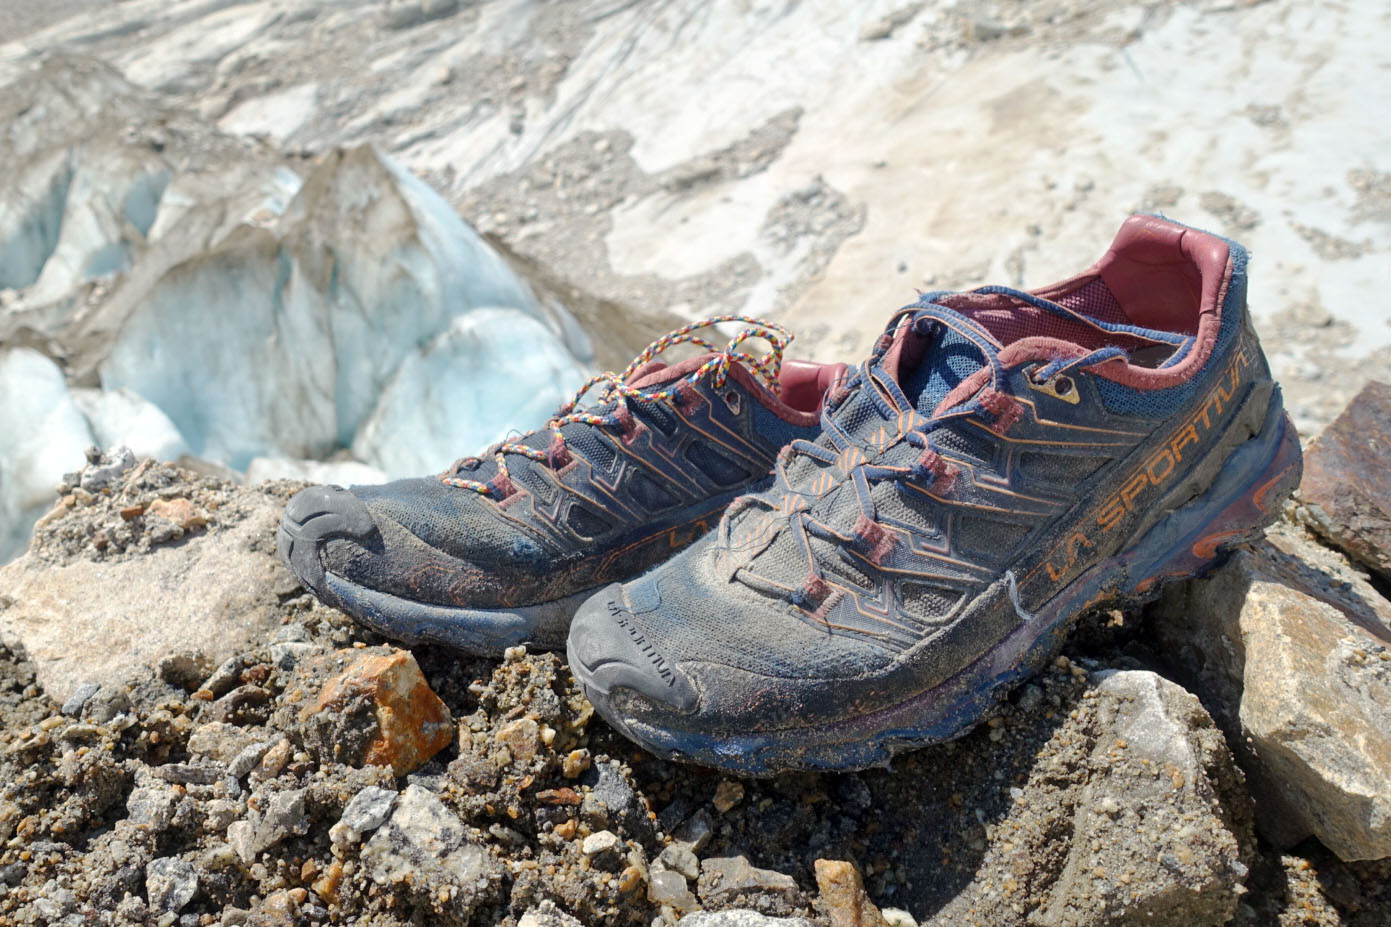 Ascend Approach II Low Waterproof Hiking Shoes for Men